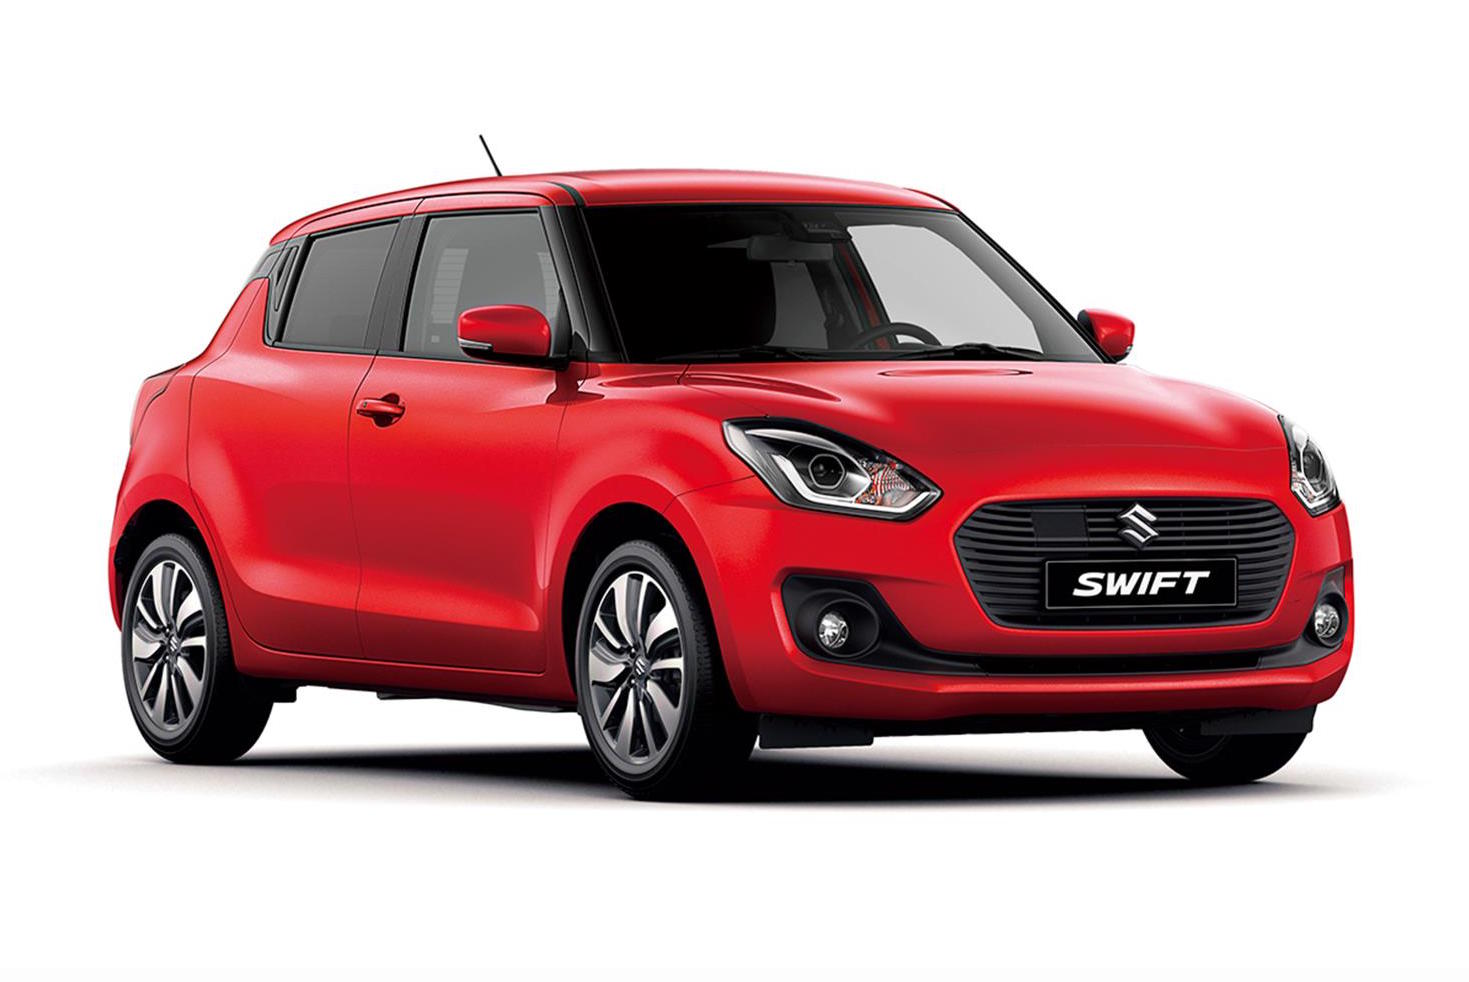 2017 Suzuki Swift arrives in Australia in June